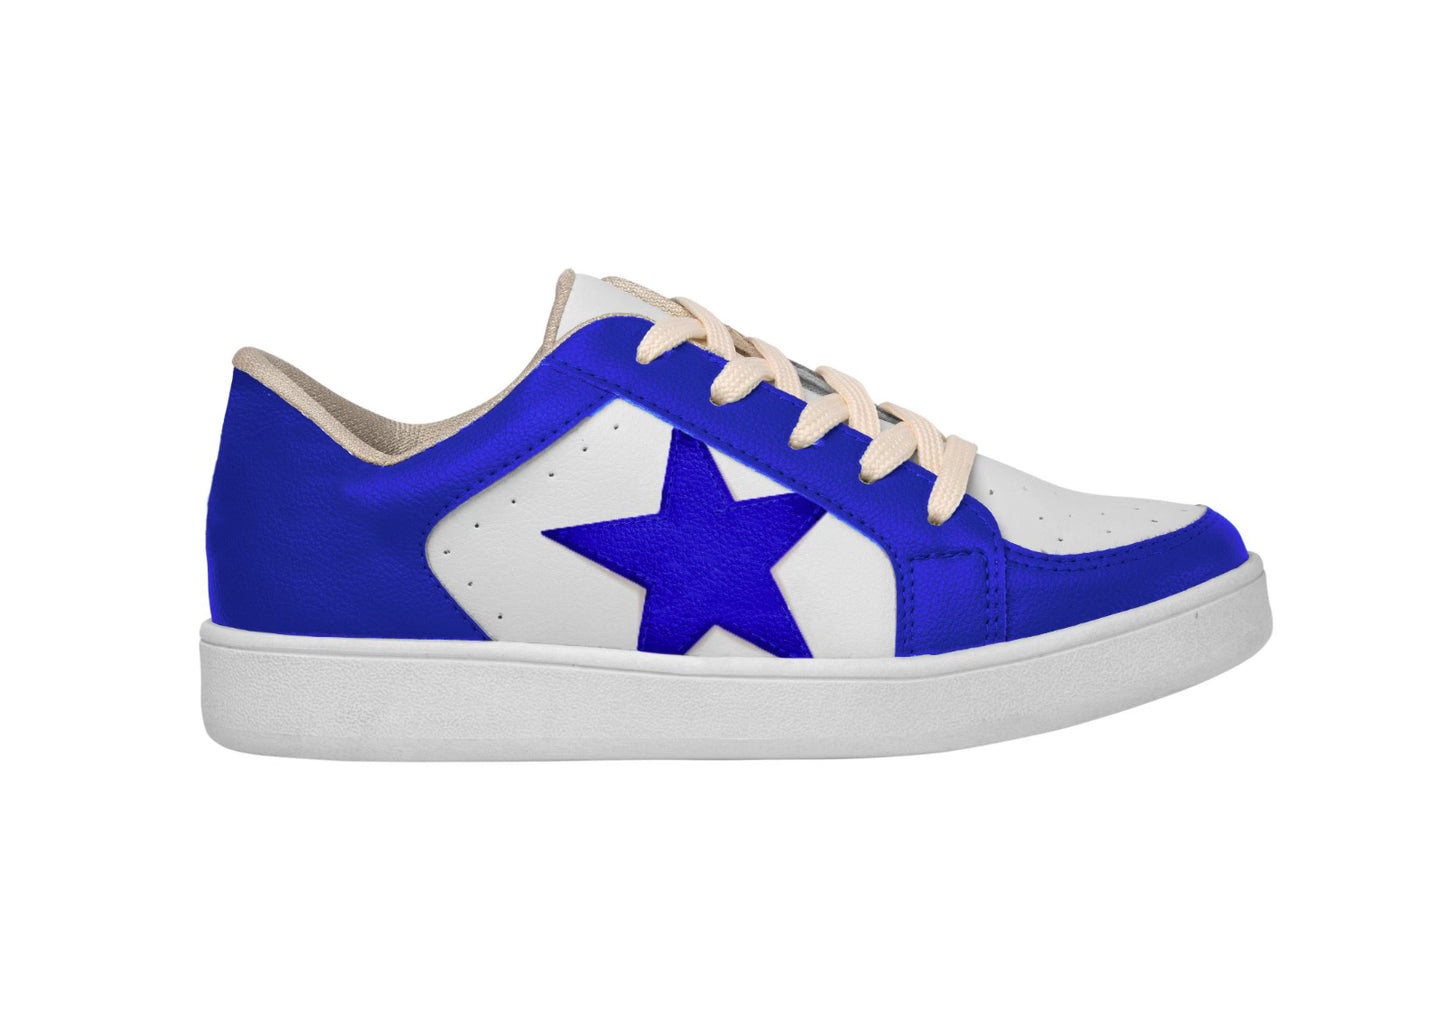 (6) Blue Star Sneakers